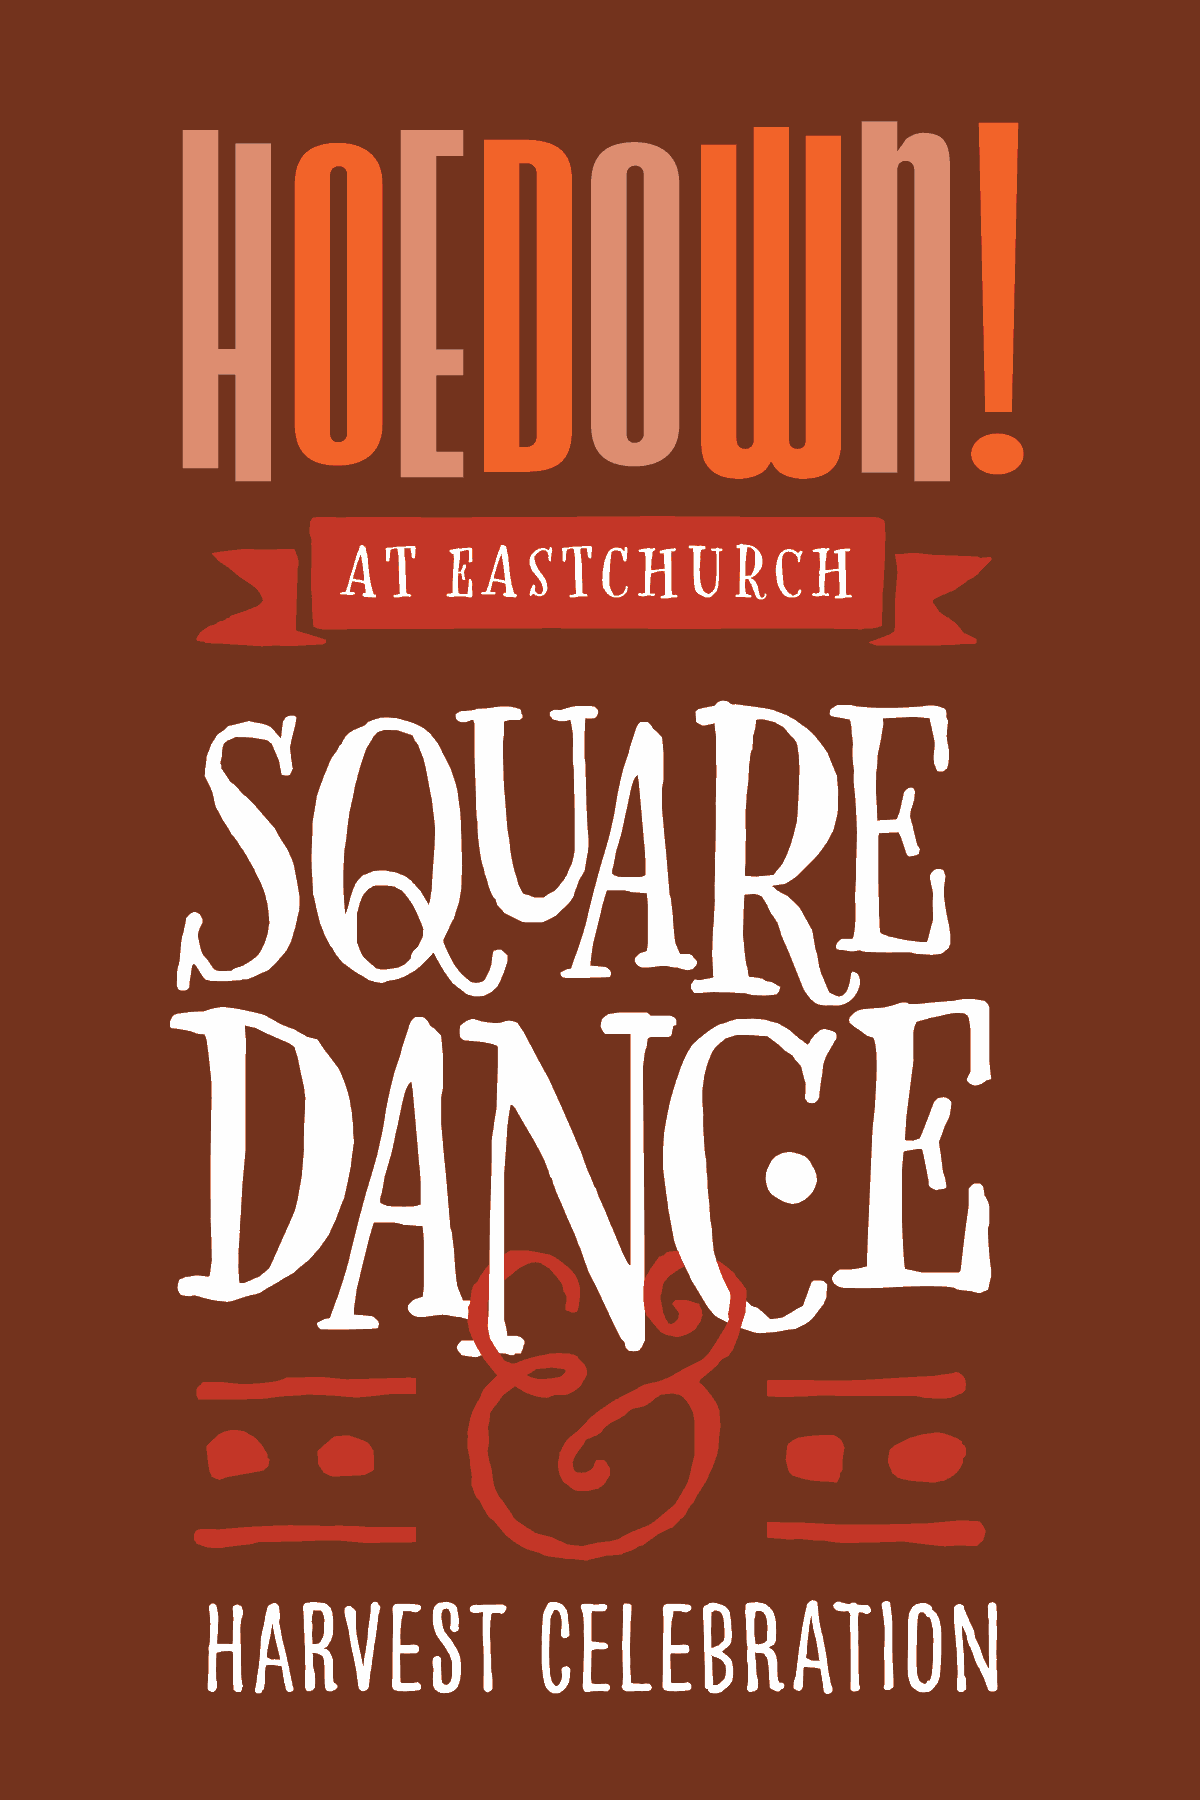 Hoedown at EastChurch. Square Dance & Harvest Festival.